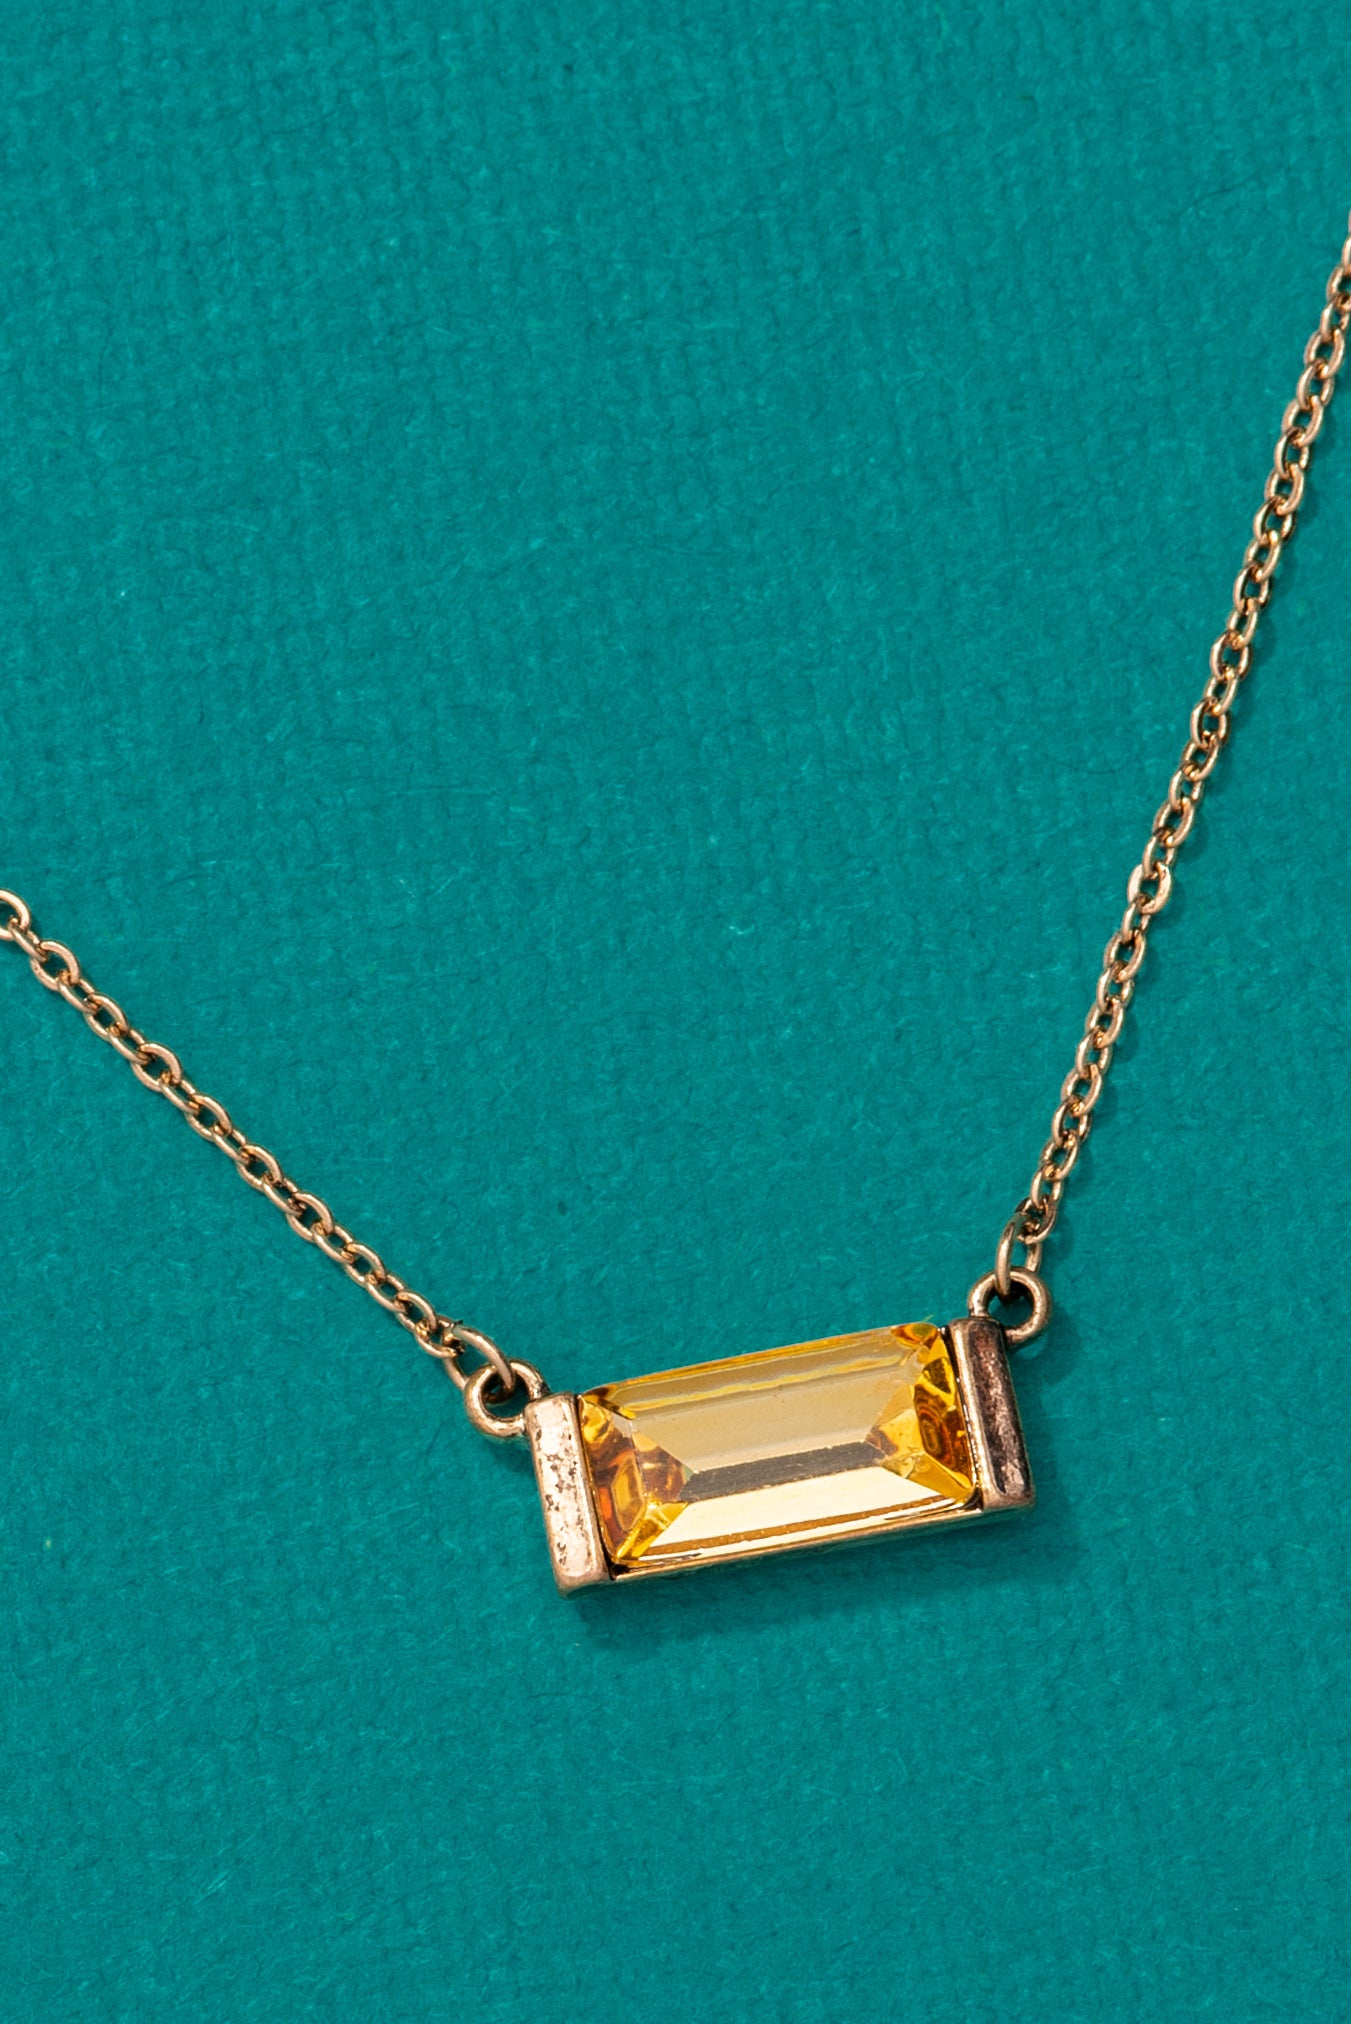 Type 3 Canary Diamond Necklace